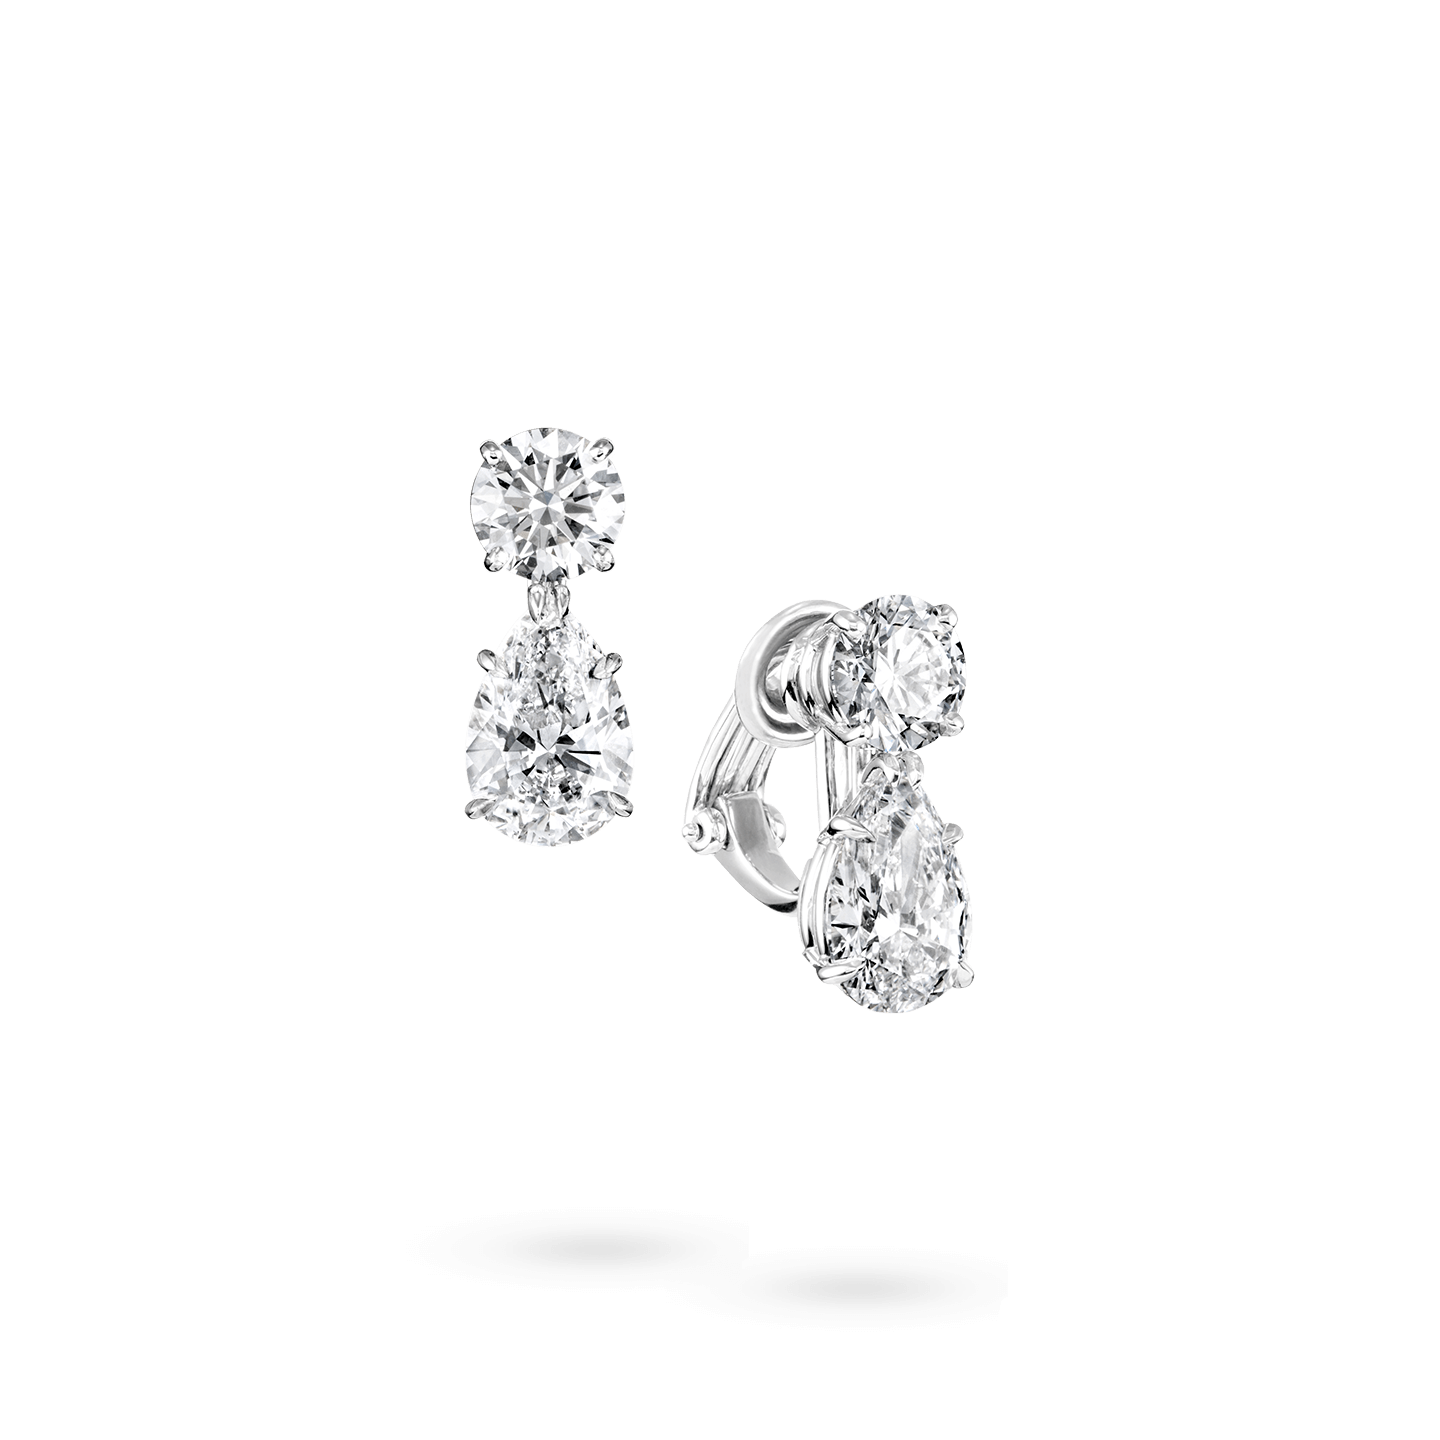 Harry Winston Diamond Earrings - M.J. Bohan Co., Inc.